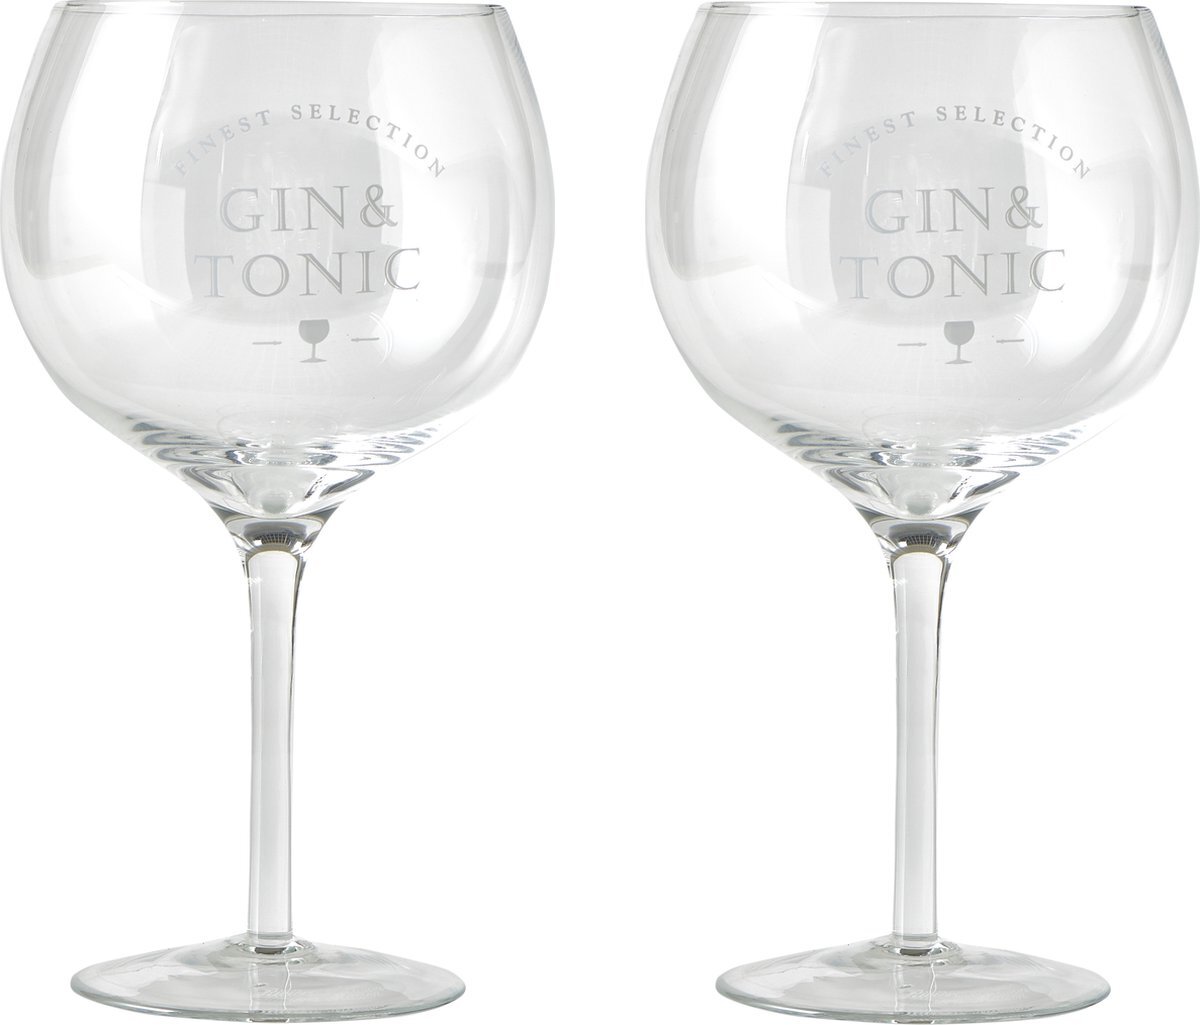 Riviera Maison Gin & Tonic Glas Finest Selection Gin & Tonic Glas Set 2 Stuks